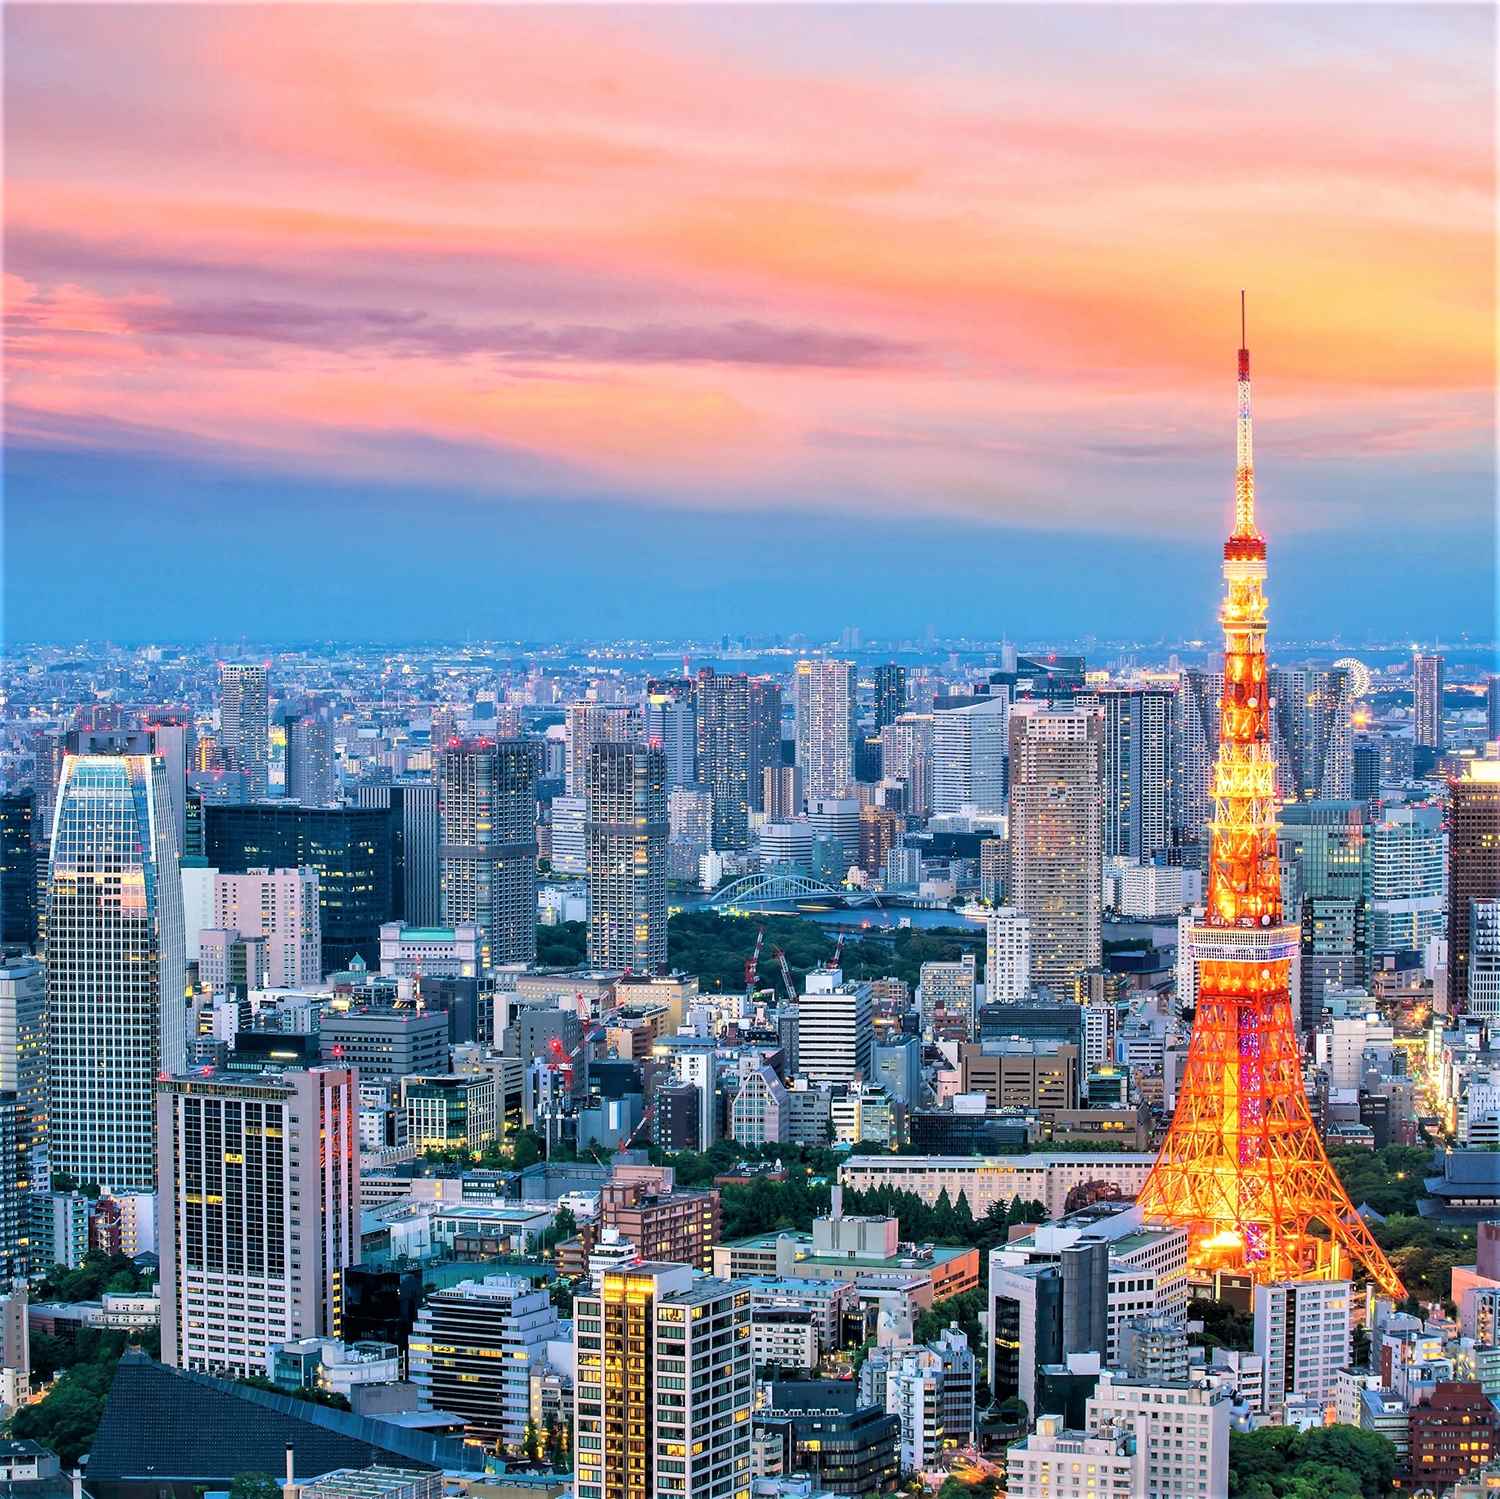 Roppongi Hills Mori Tower in Tokyo = Shutterstock 6